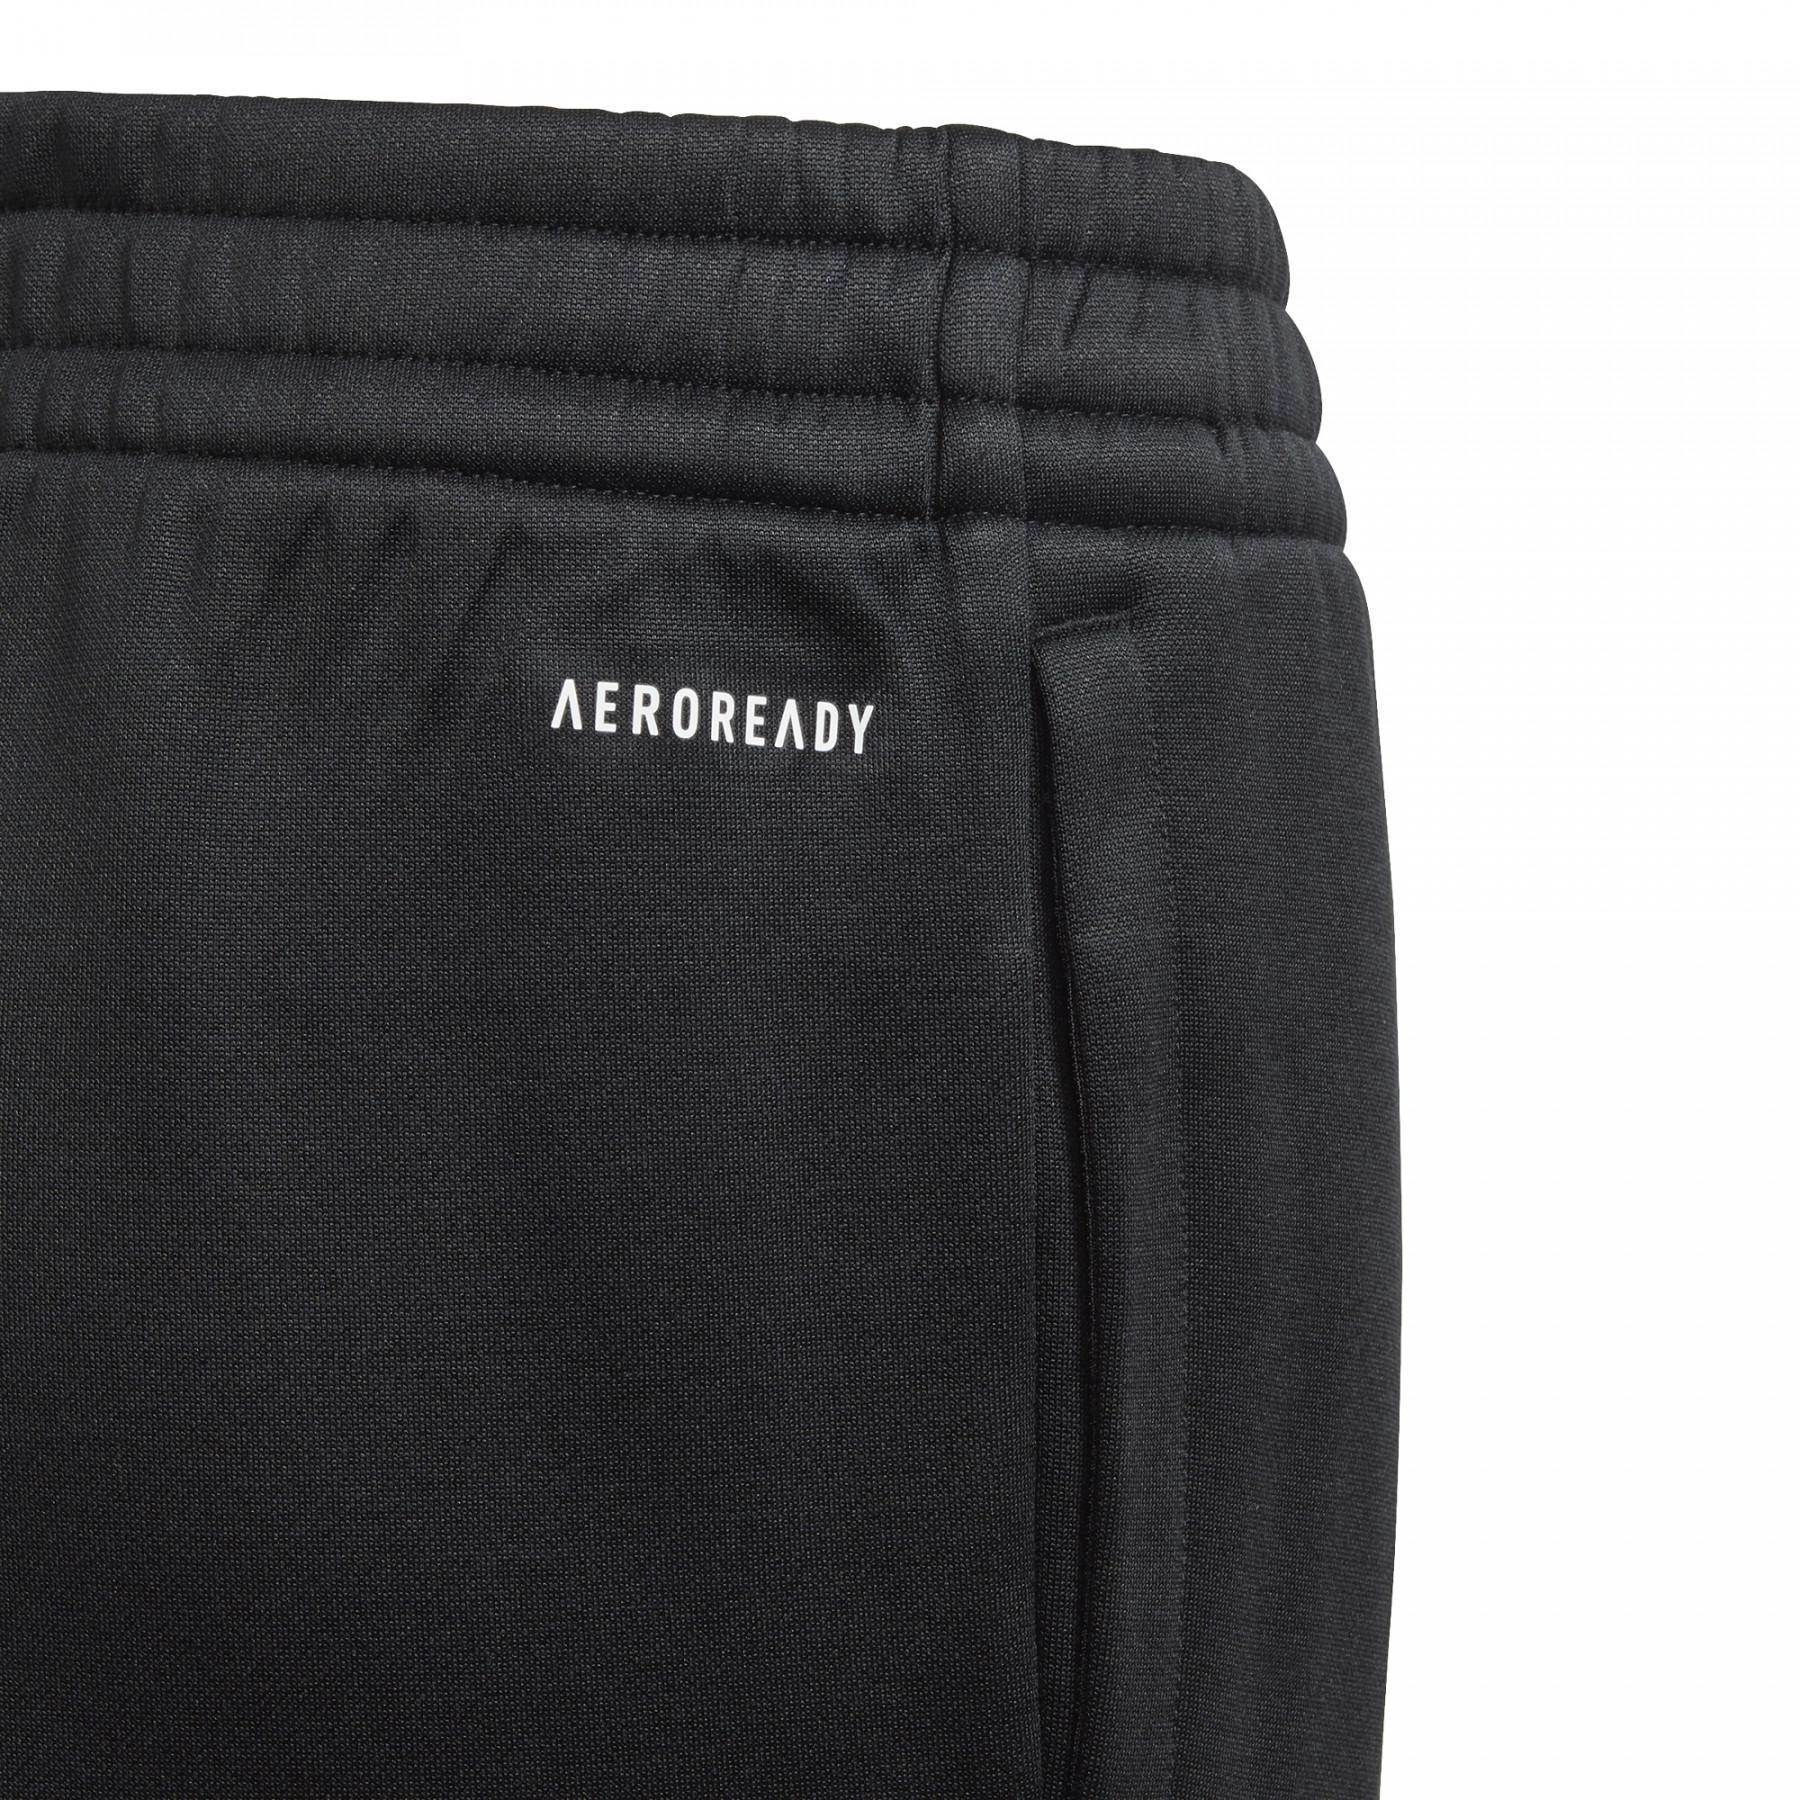 Pantaloni per bambini adidas Aeroeady